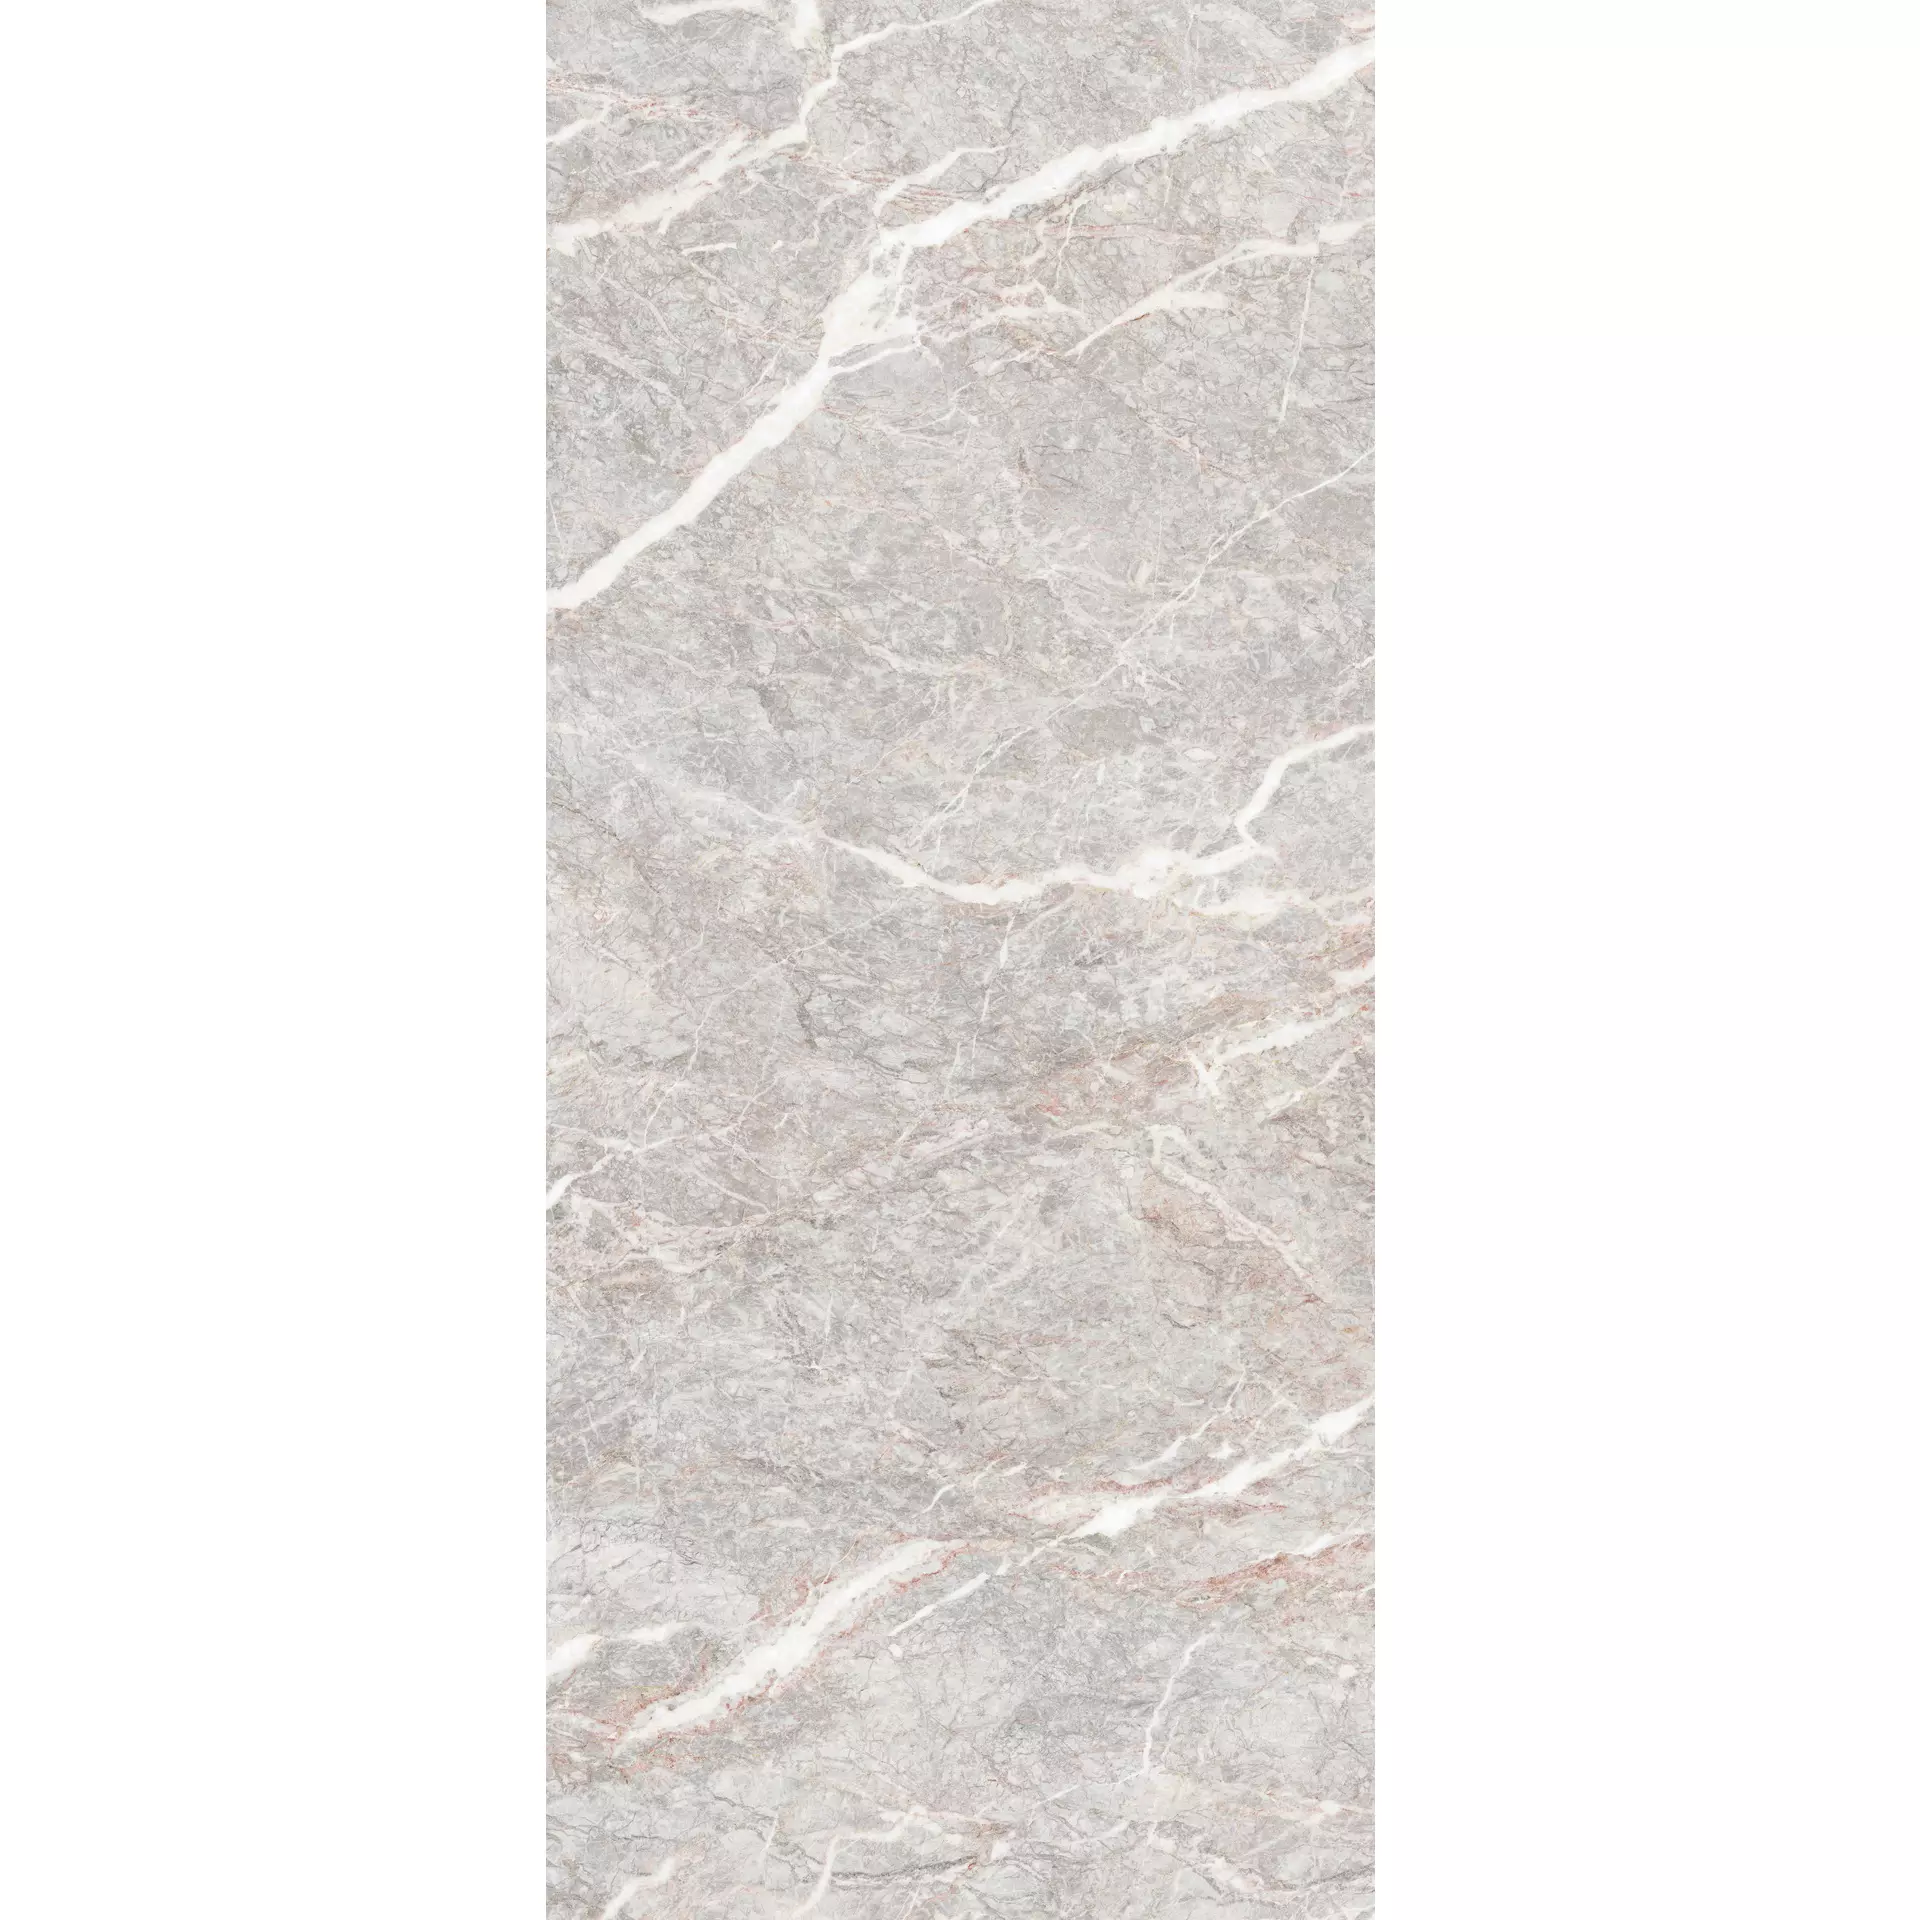 Marazzi Grande Marble Look Fior Di Pesco Carnico Naturale – Matt MEPA 120x278cm rectified 6mm